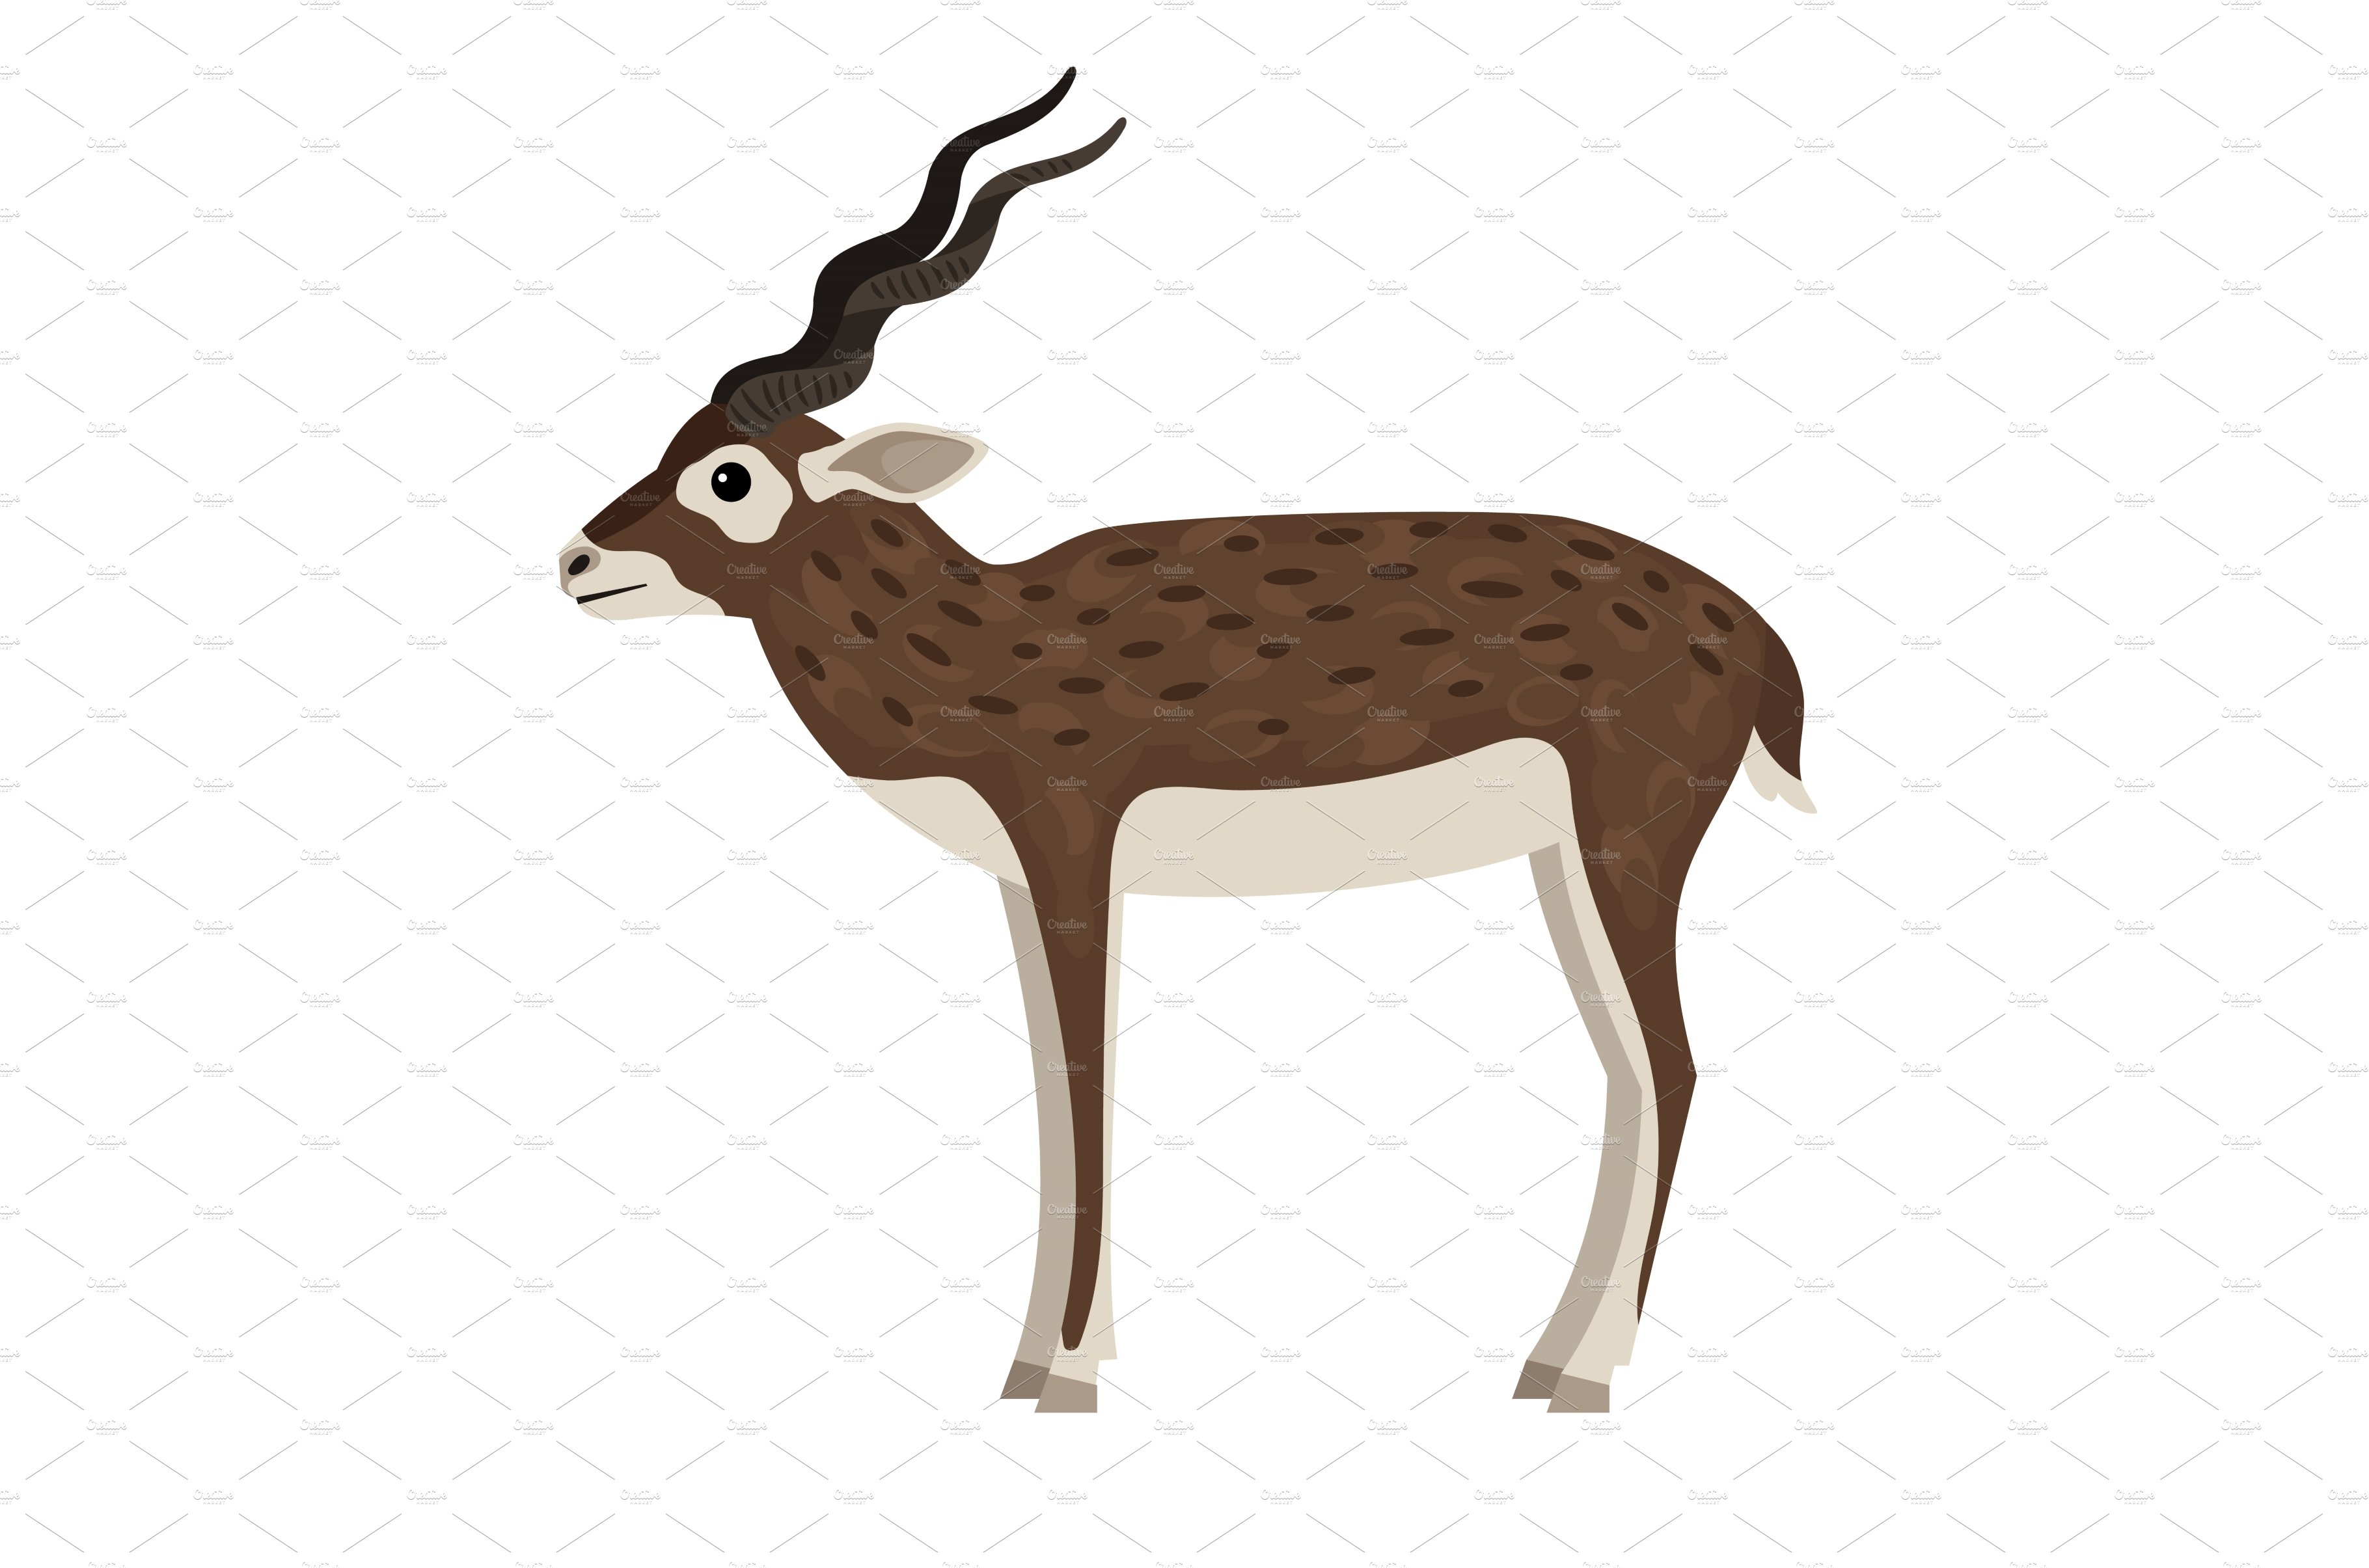 Cartoon wild antelope cover image.